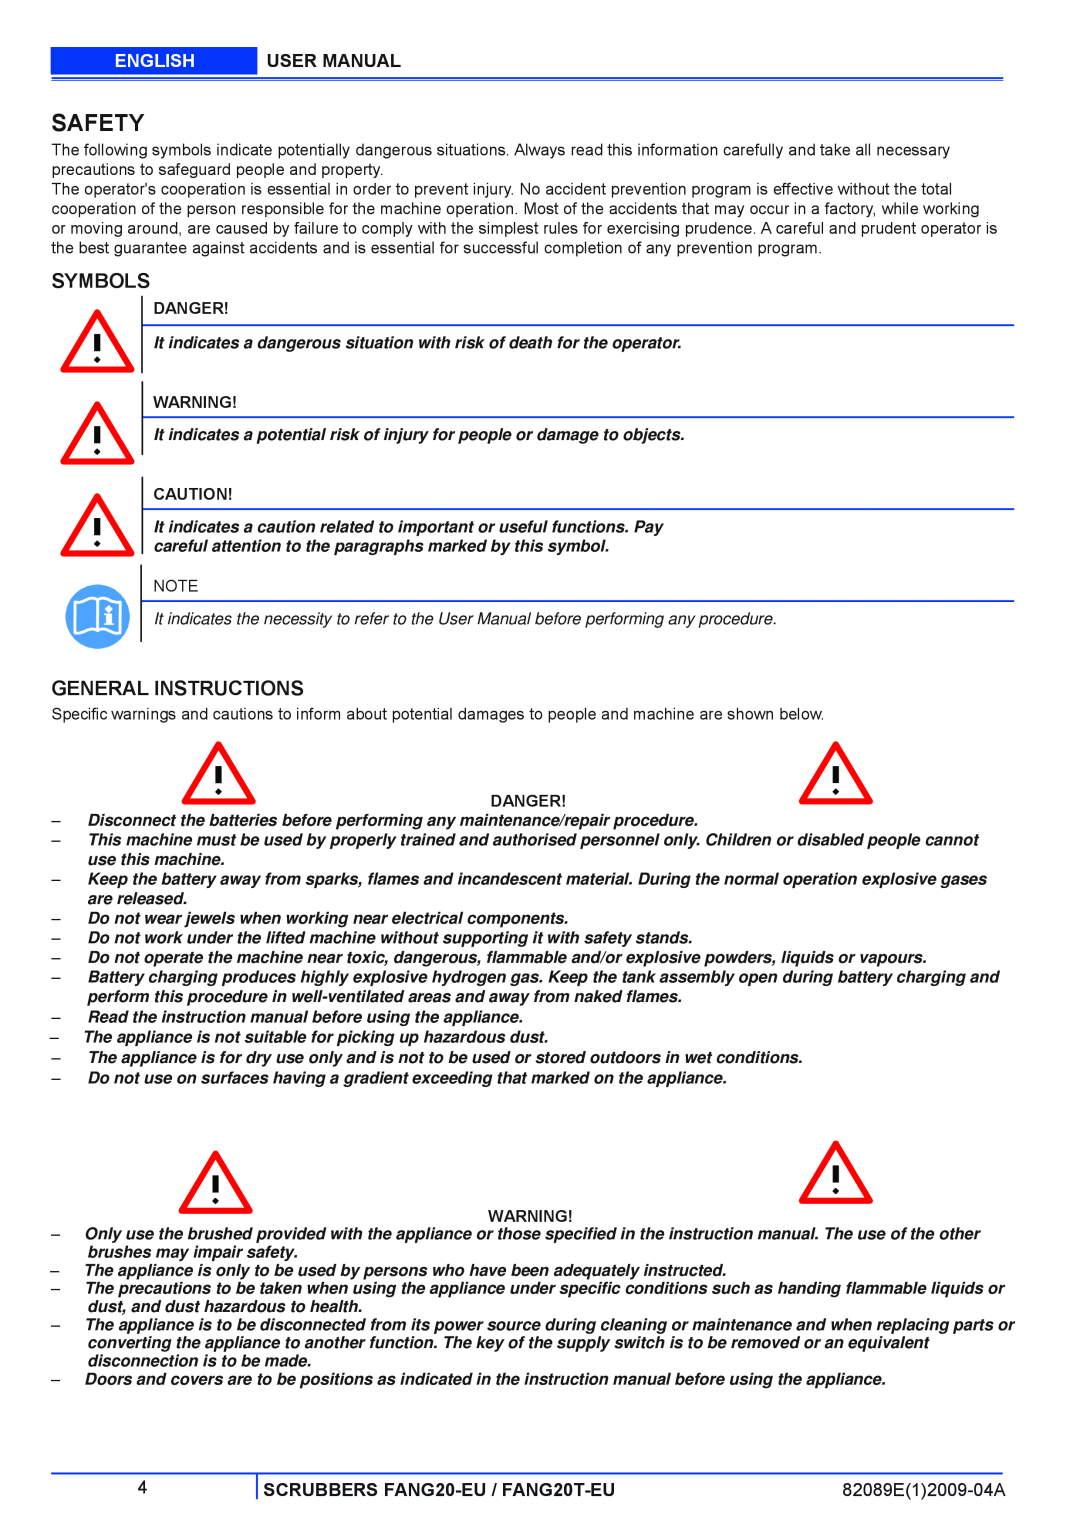 Viper FANG 20T-EU Safety, Symbols, General Instructions, English, SCRUBBERS FANG20-EU / FANG20T-EU, 82089E12009-04A 